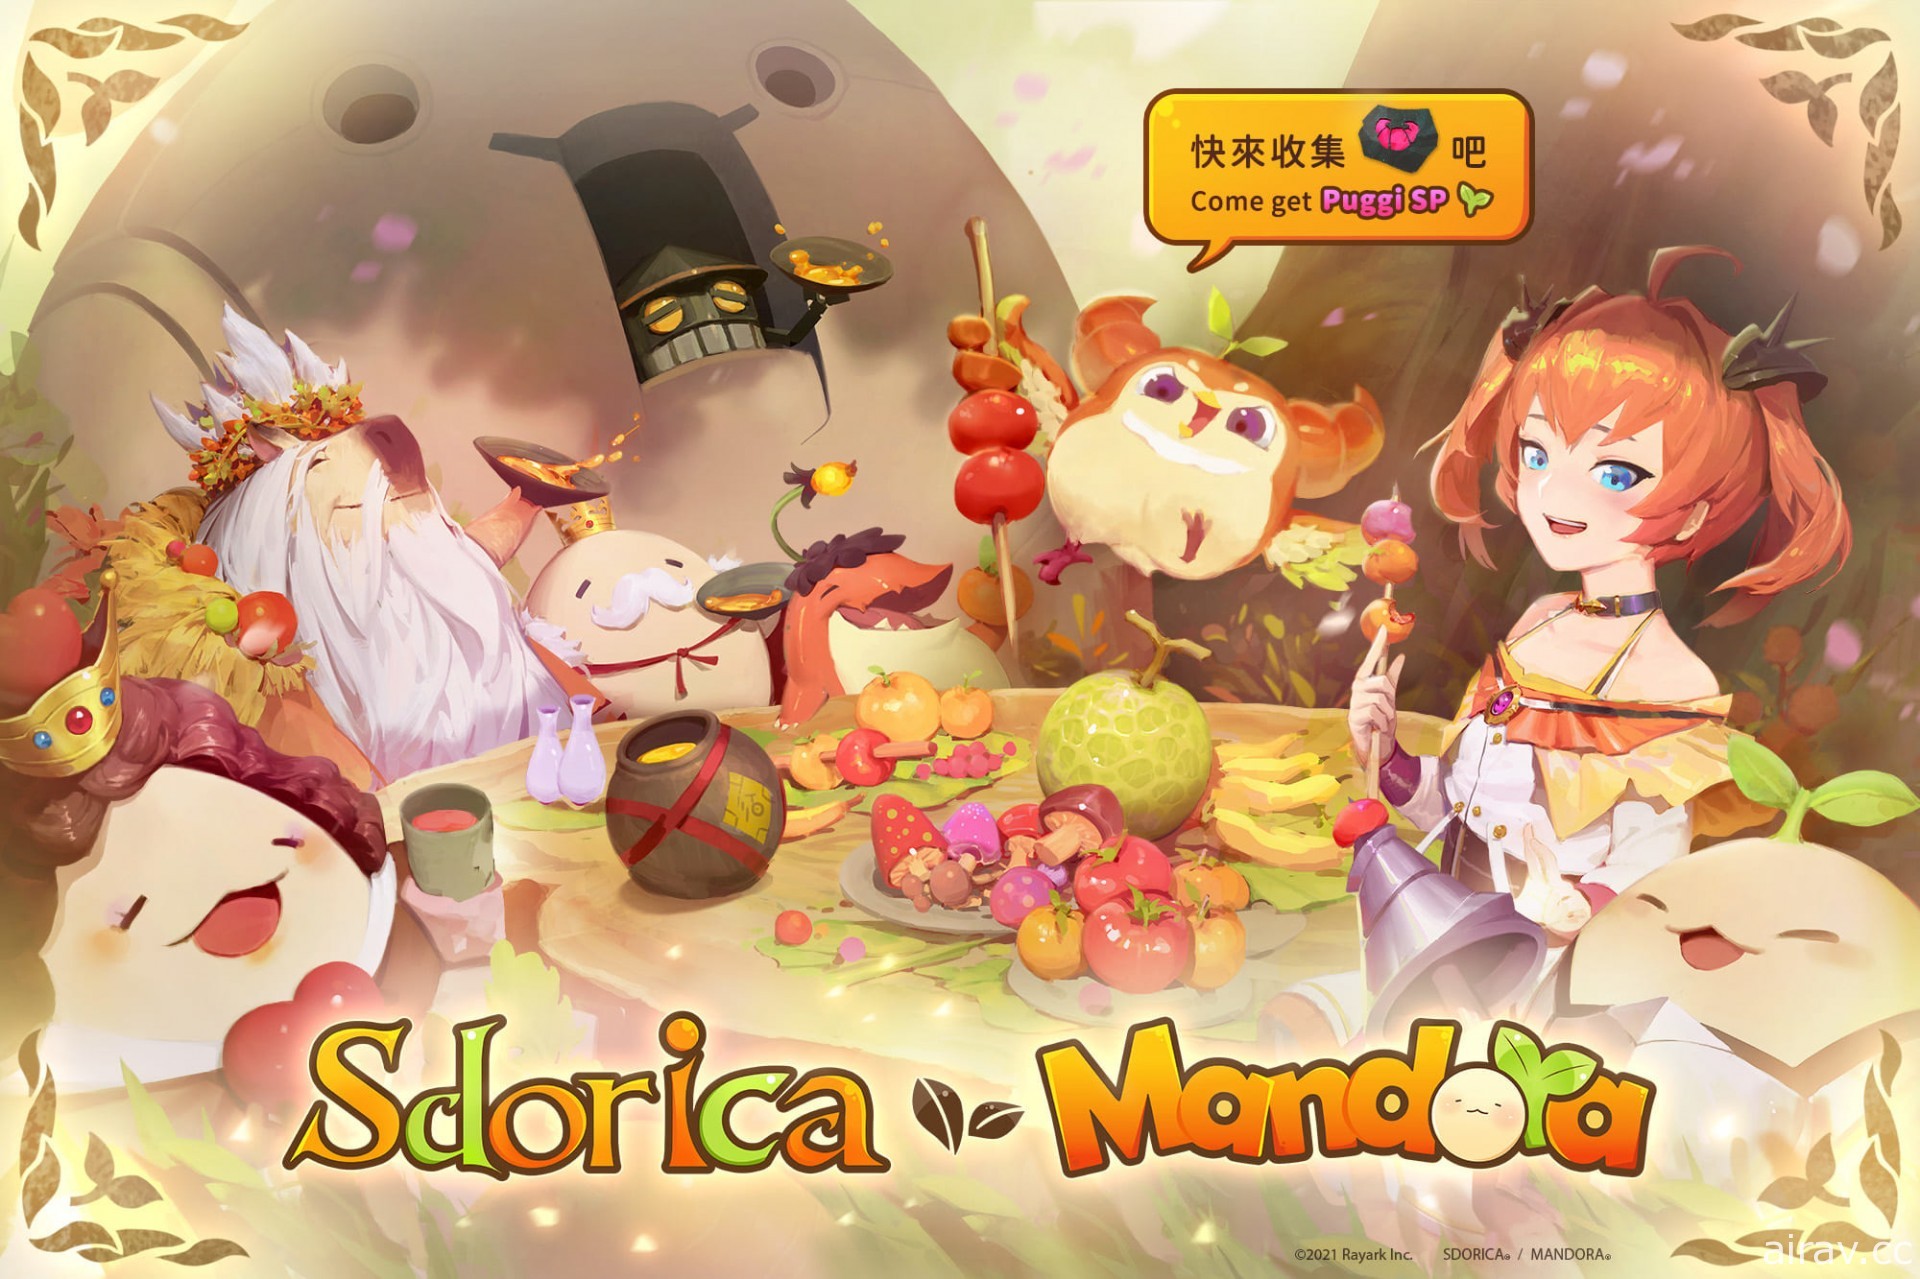 《Sdorica 万象物语》x《Mandora》合作开跑 推出限定蔓朵拉造型角色与活动关卡